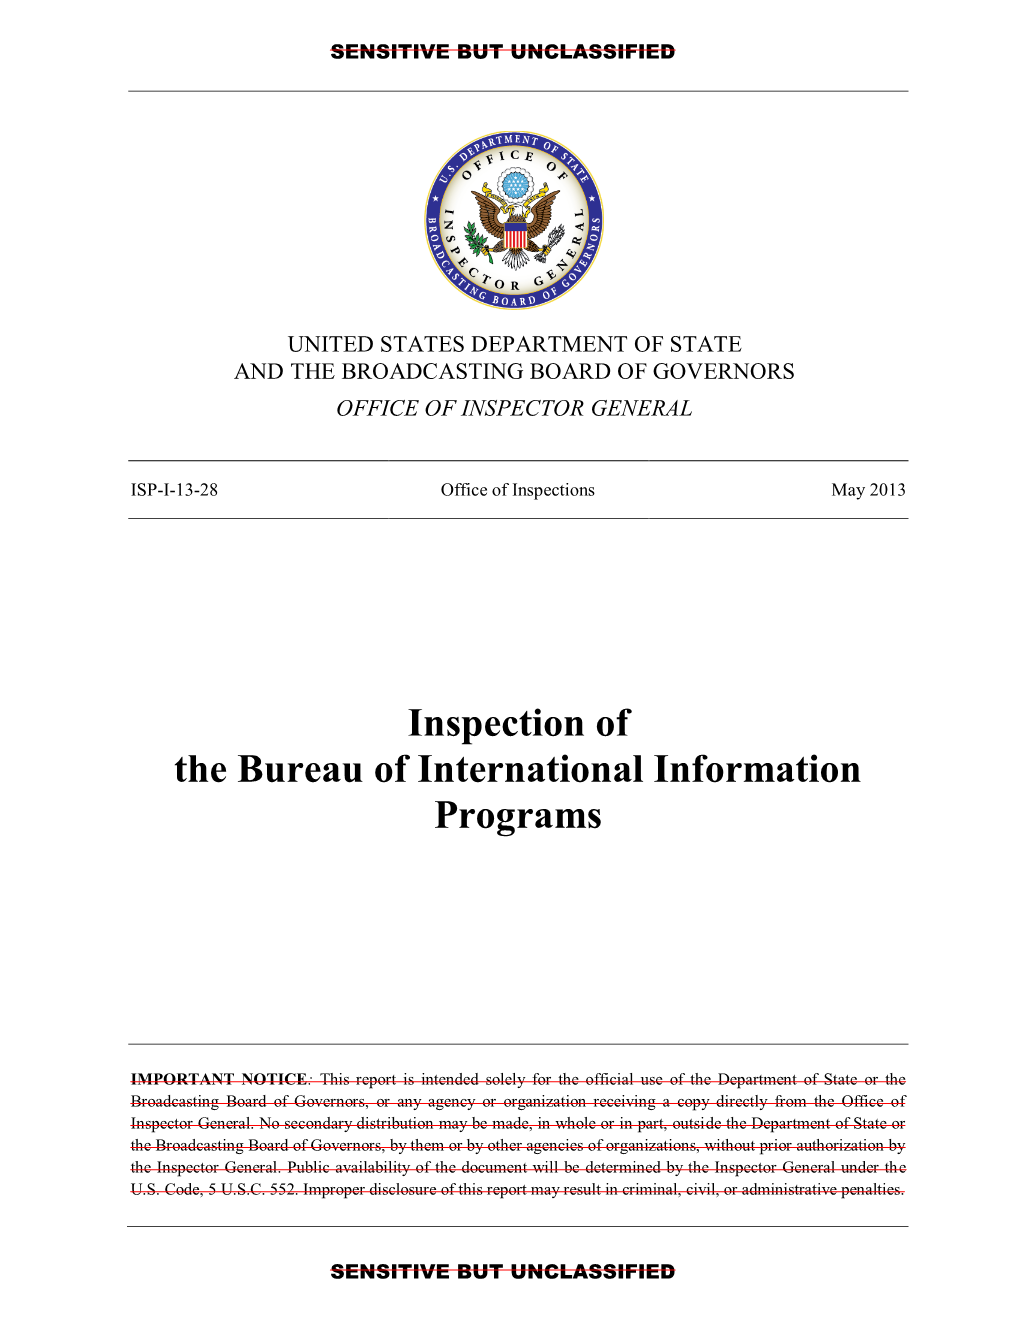 Inspection of the Bureau of International Information Programs